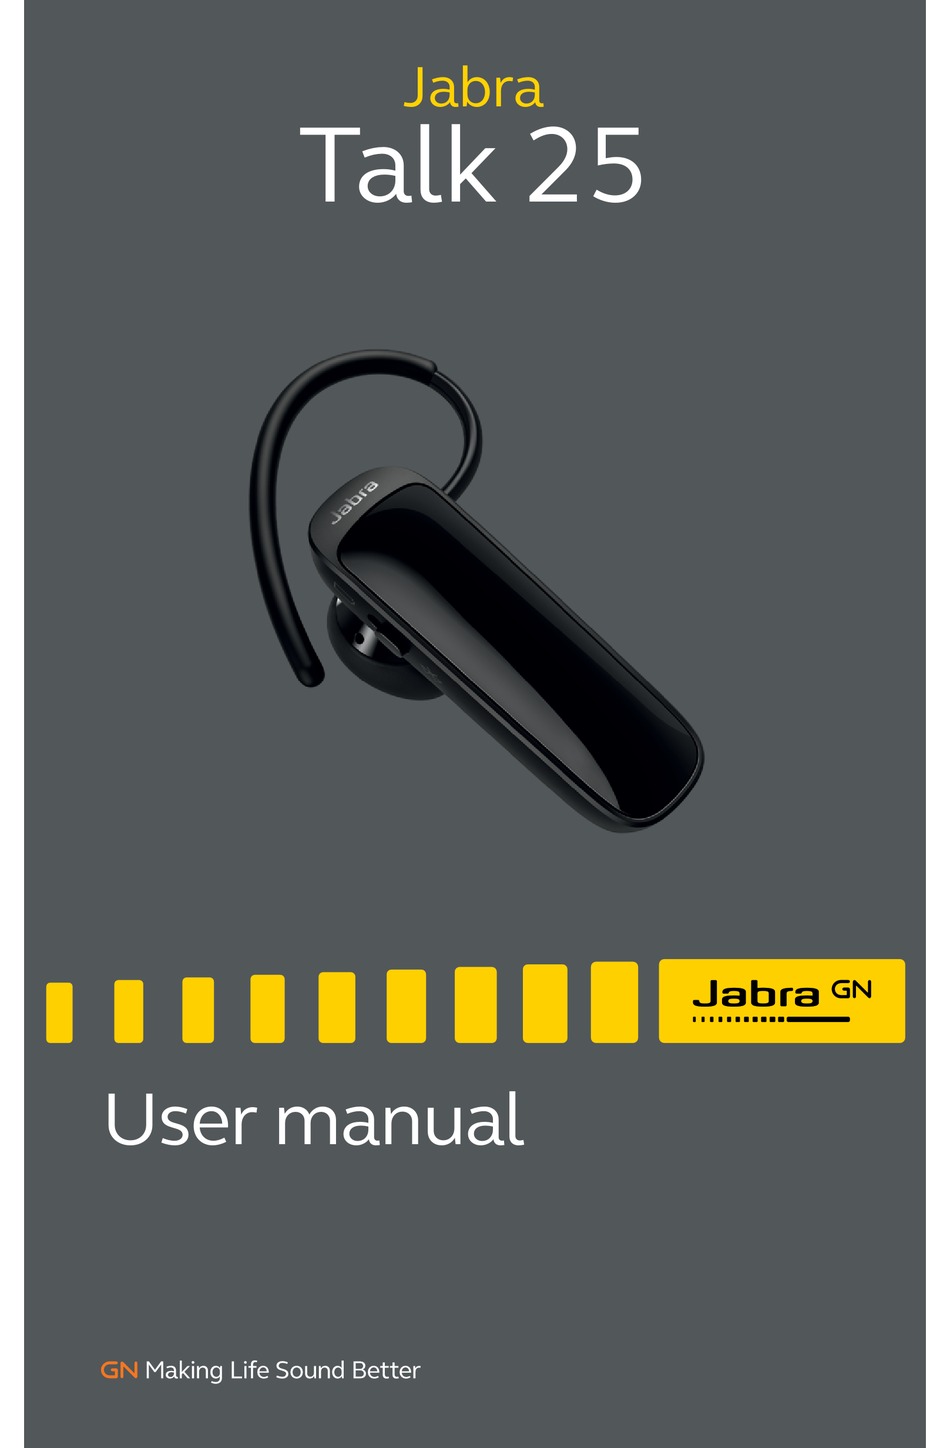 JABRA TALK 25 USER MANUAL Pdf Download | ManualsLib